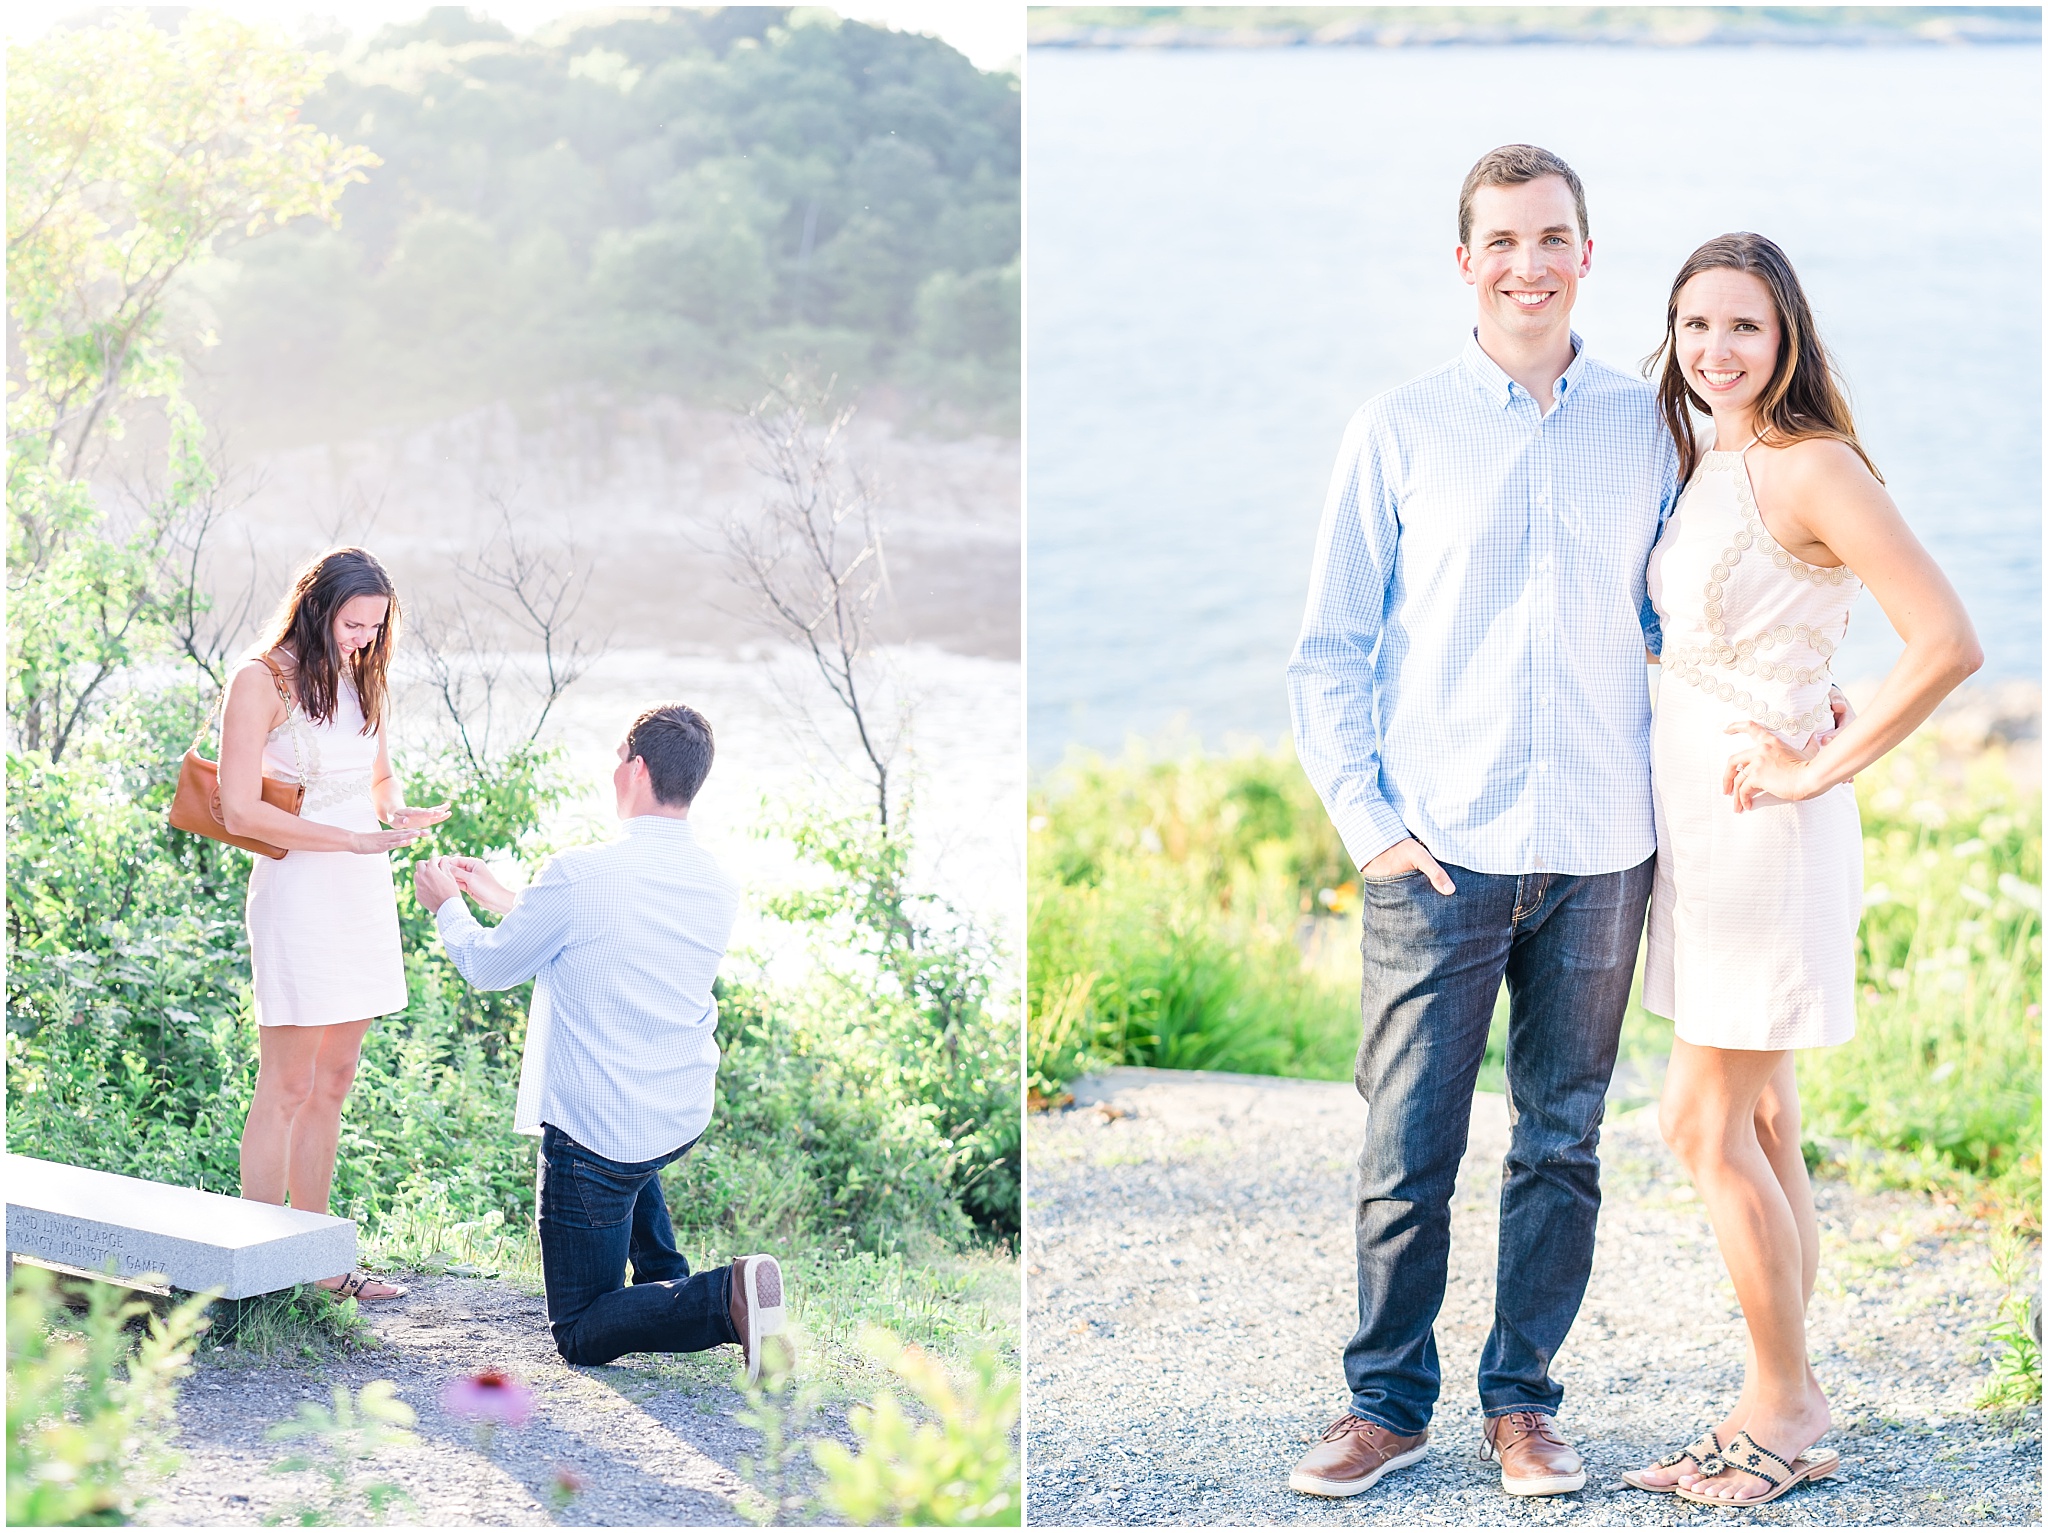 NH ME MA Proposal Photographer | Engagement Photographer | Samantha Grant Photography